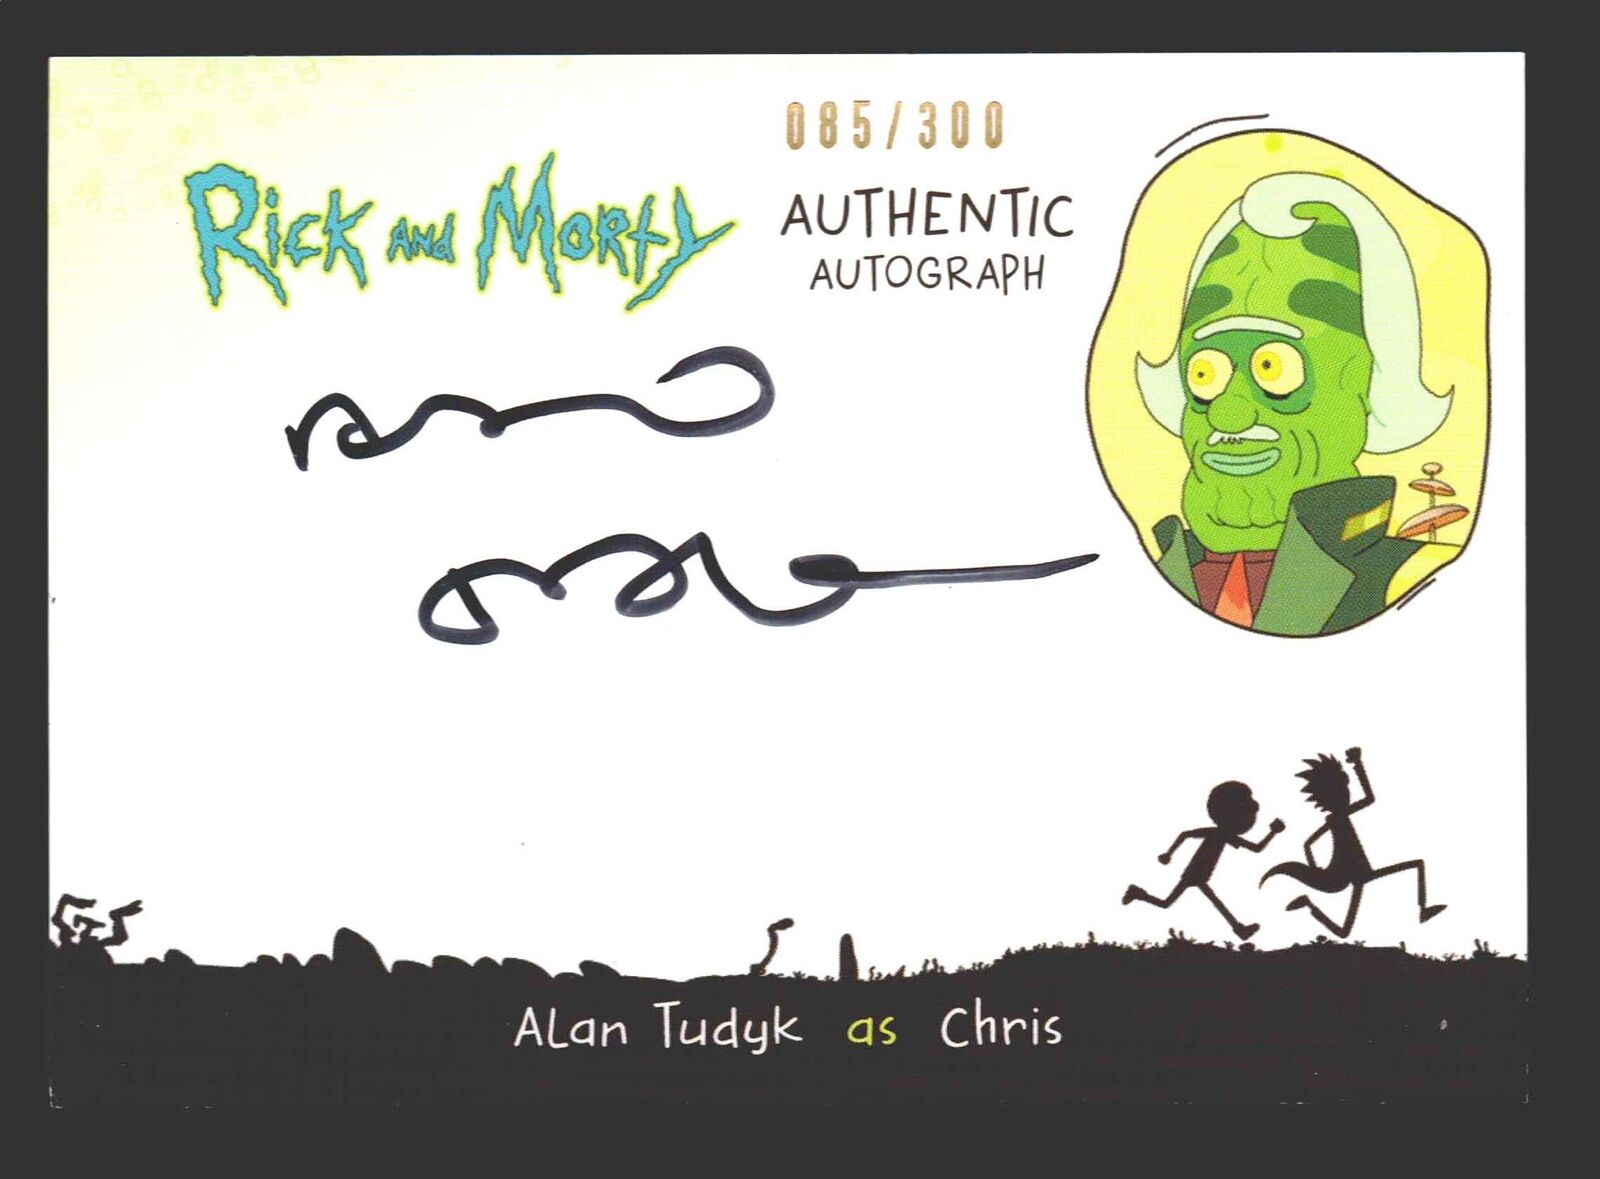 2019 Rick and Morty Season 2 AT-C Alan Tudyk as Chris Autograph Card